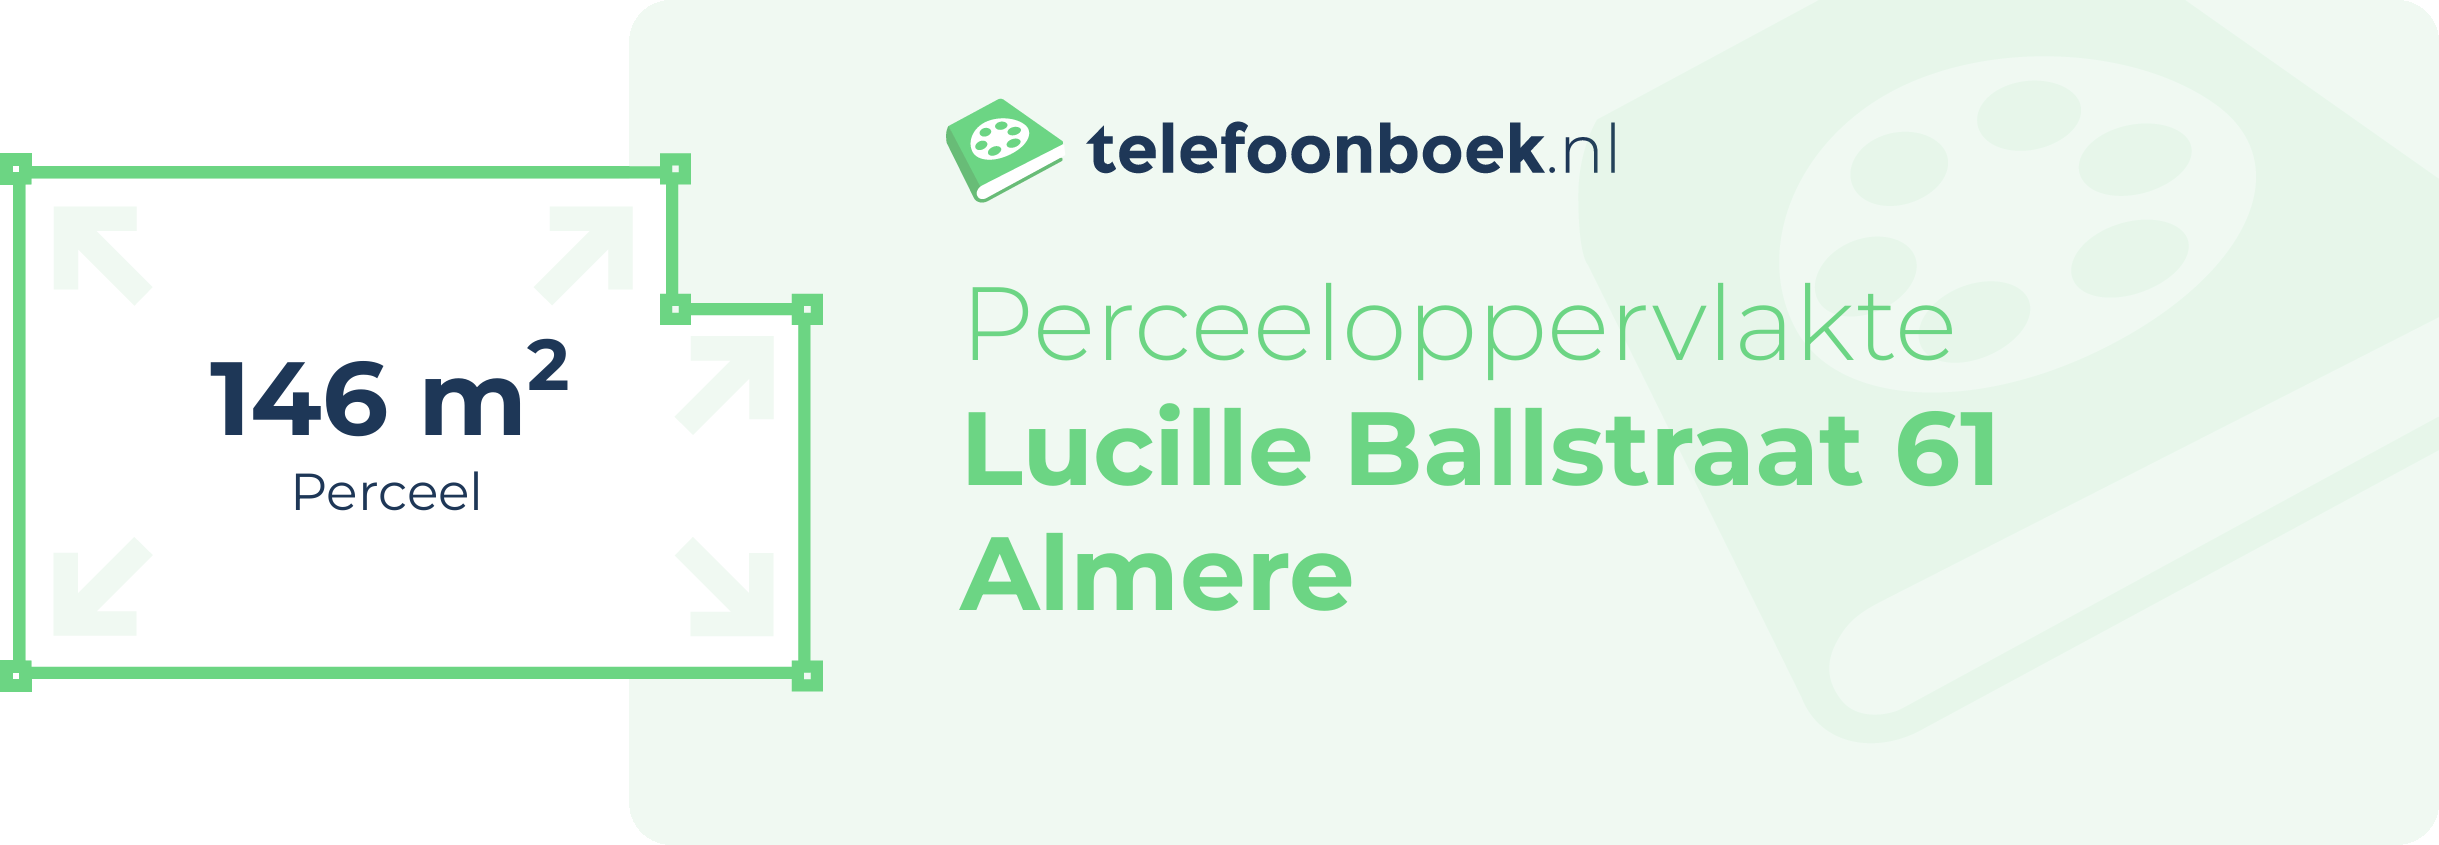 Perceeloppervlakte Lucille Ballstraat 61 Almere